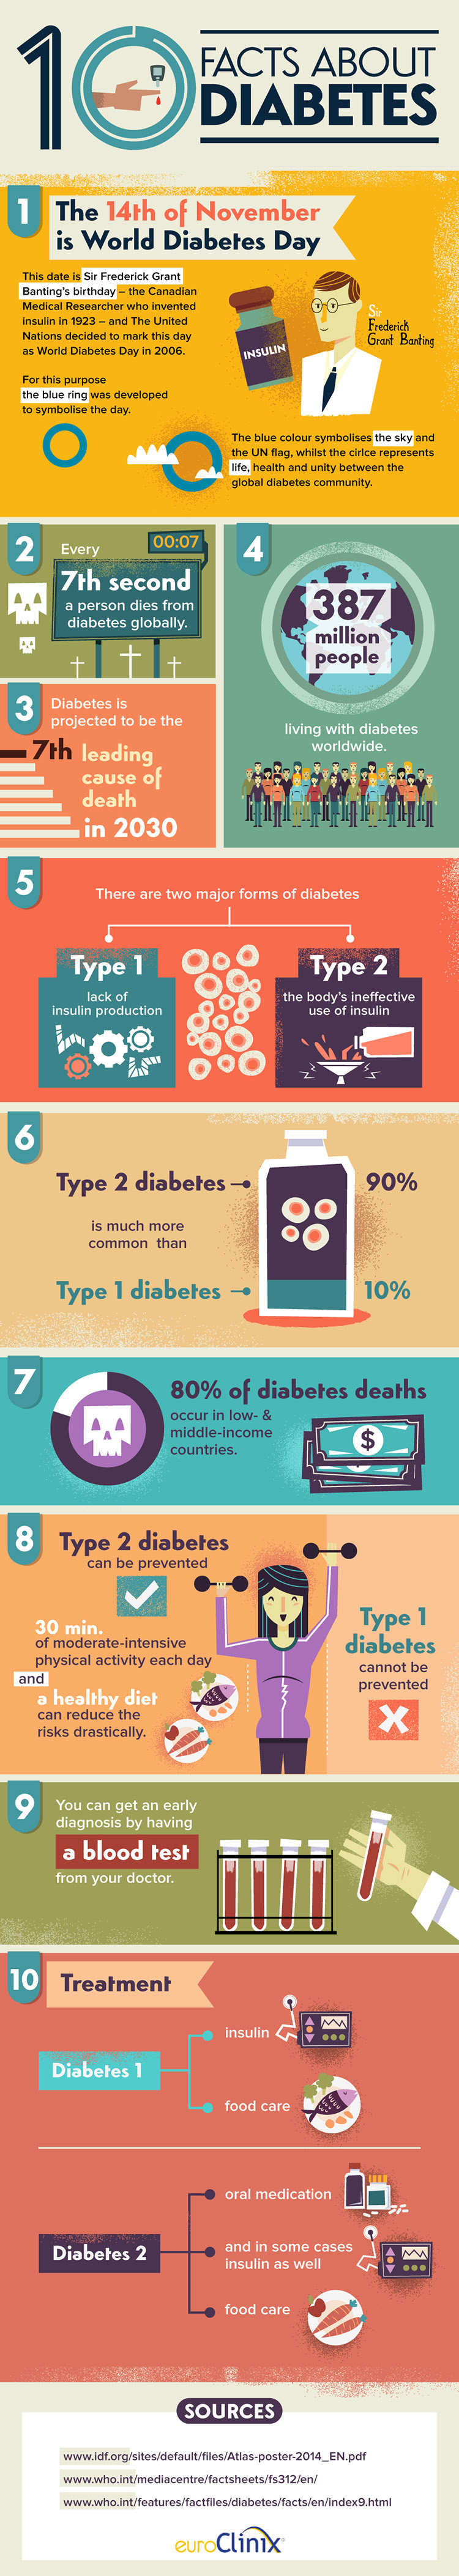 :::Diabetes Facts::: | :::Ilias Sounas -Illustrator/Designer-Ηλίας